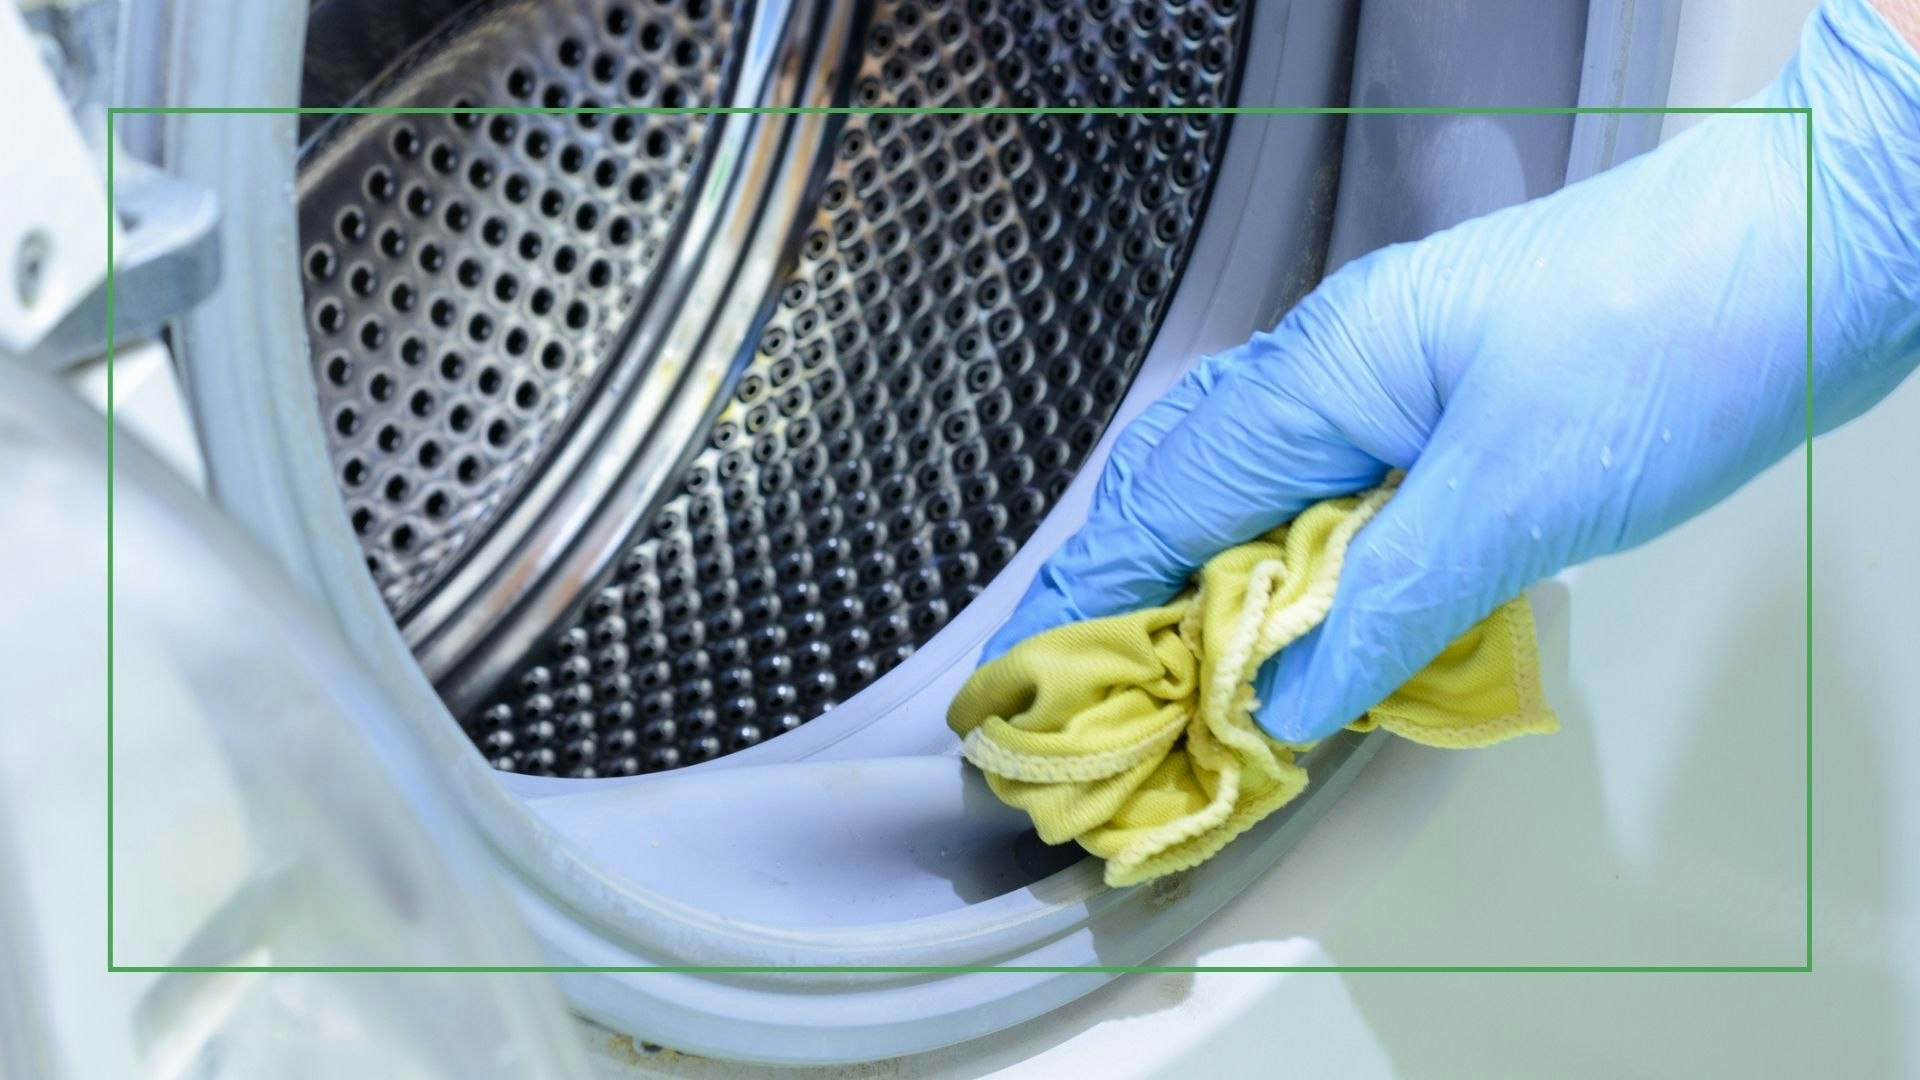 2 x Dr Beckmann Washing Machine Cleaner Deep Clean Wash For All Machines  250g